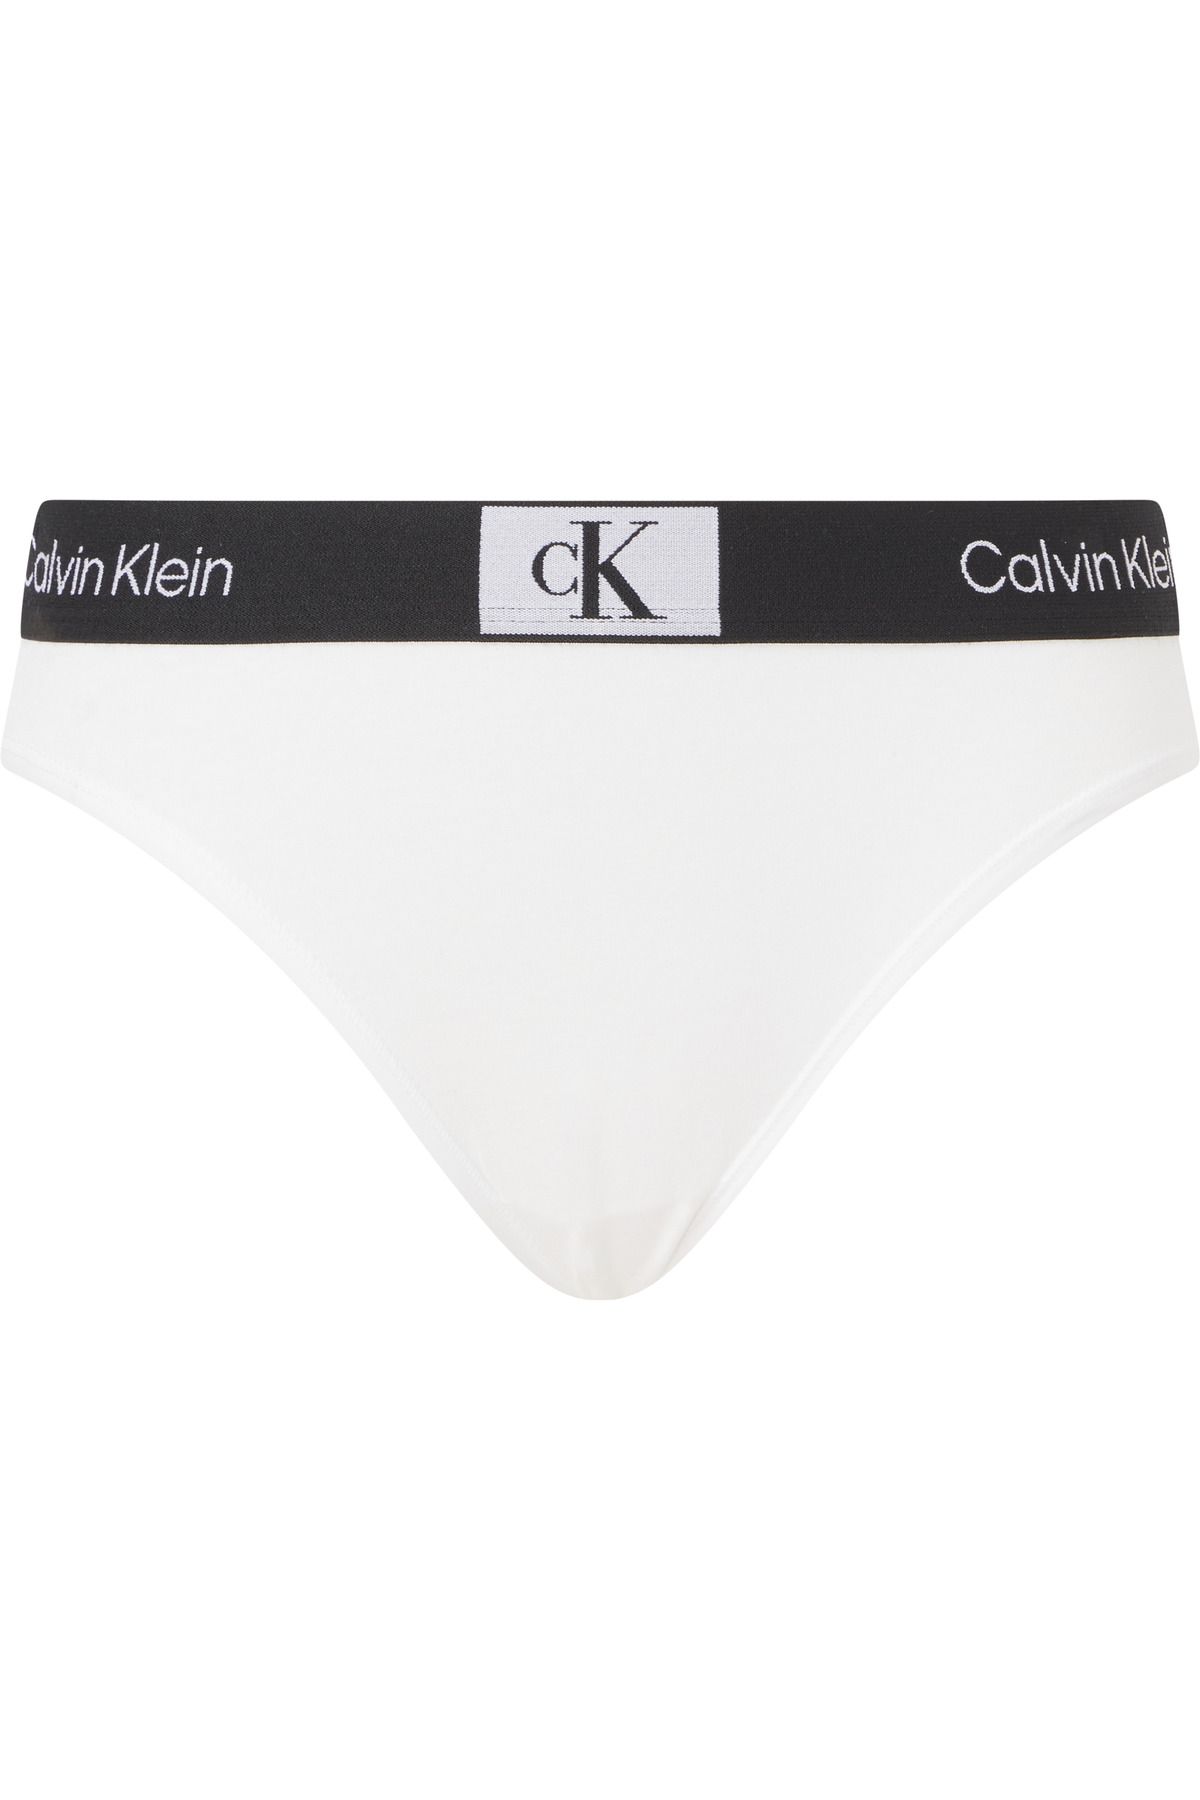 Calvin Klein Kadın Imzalı Elastik Bantlı White Külot 000qf7222e-100